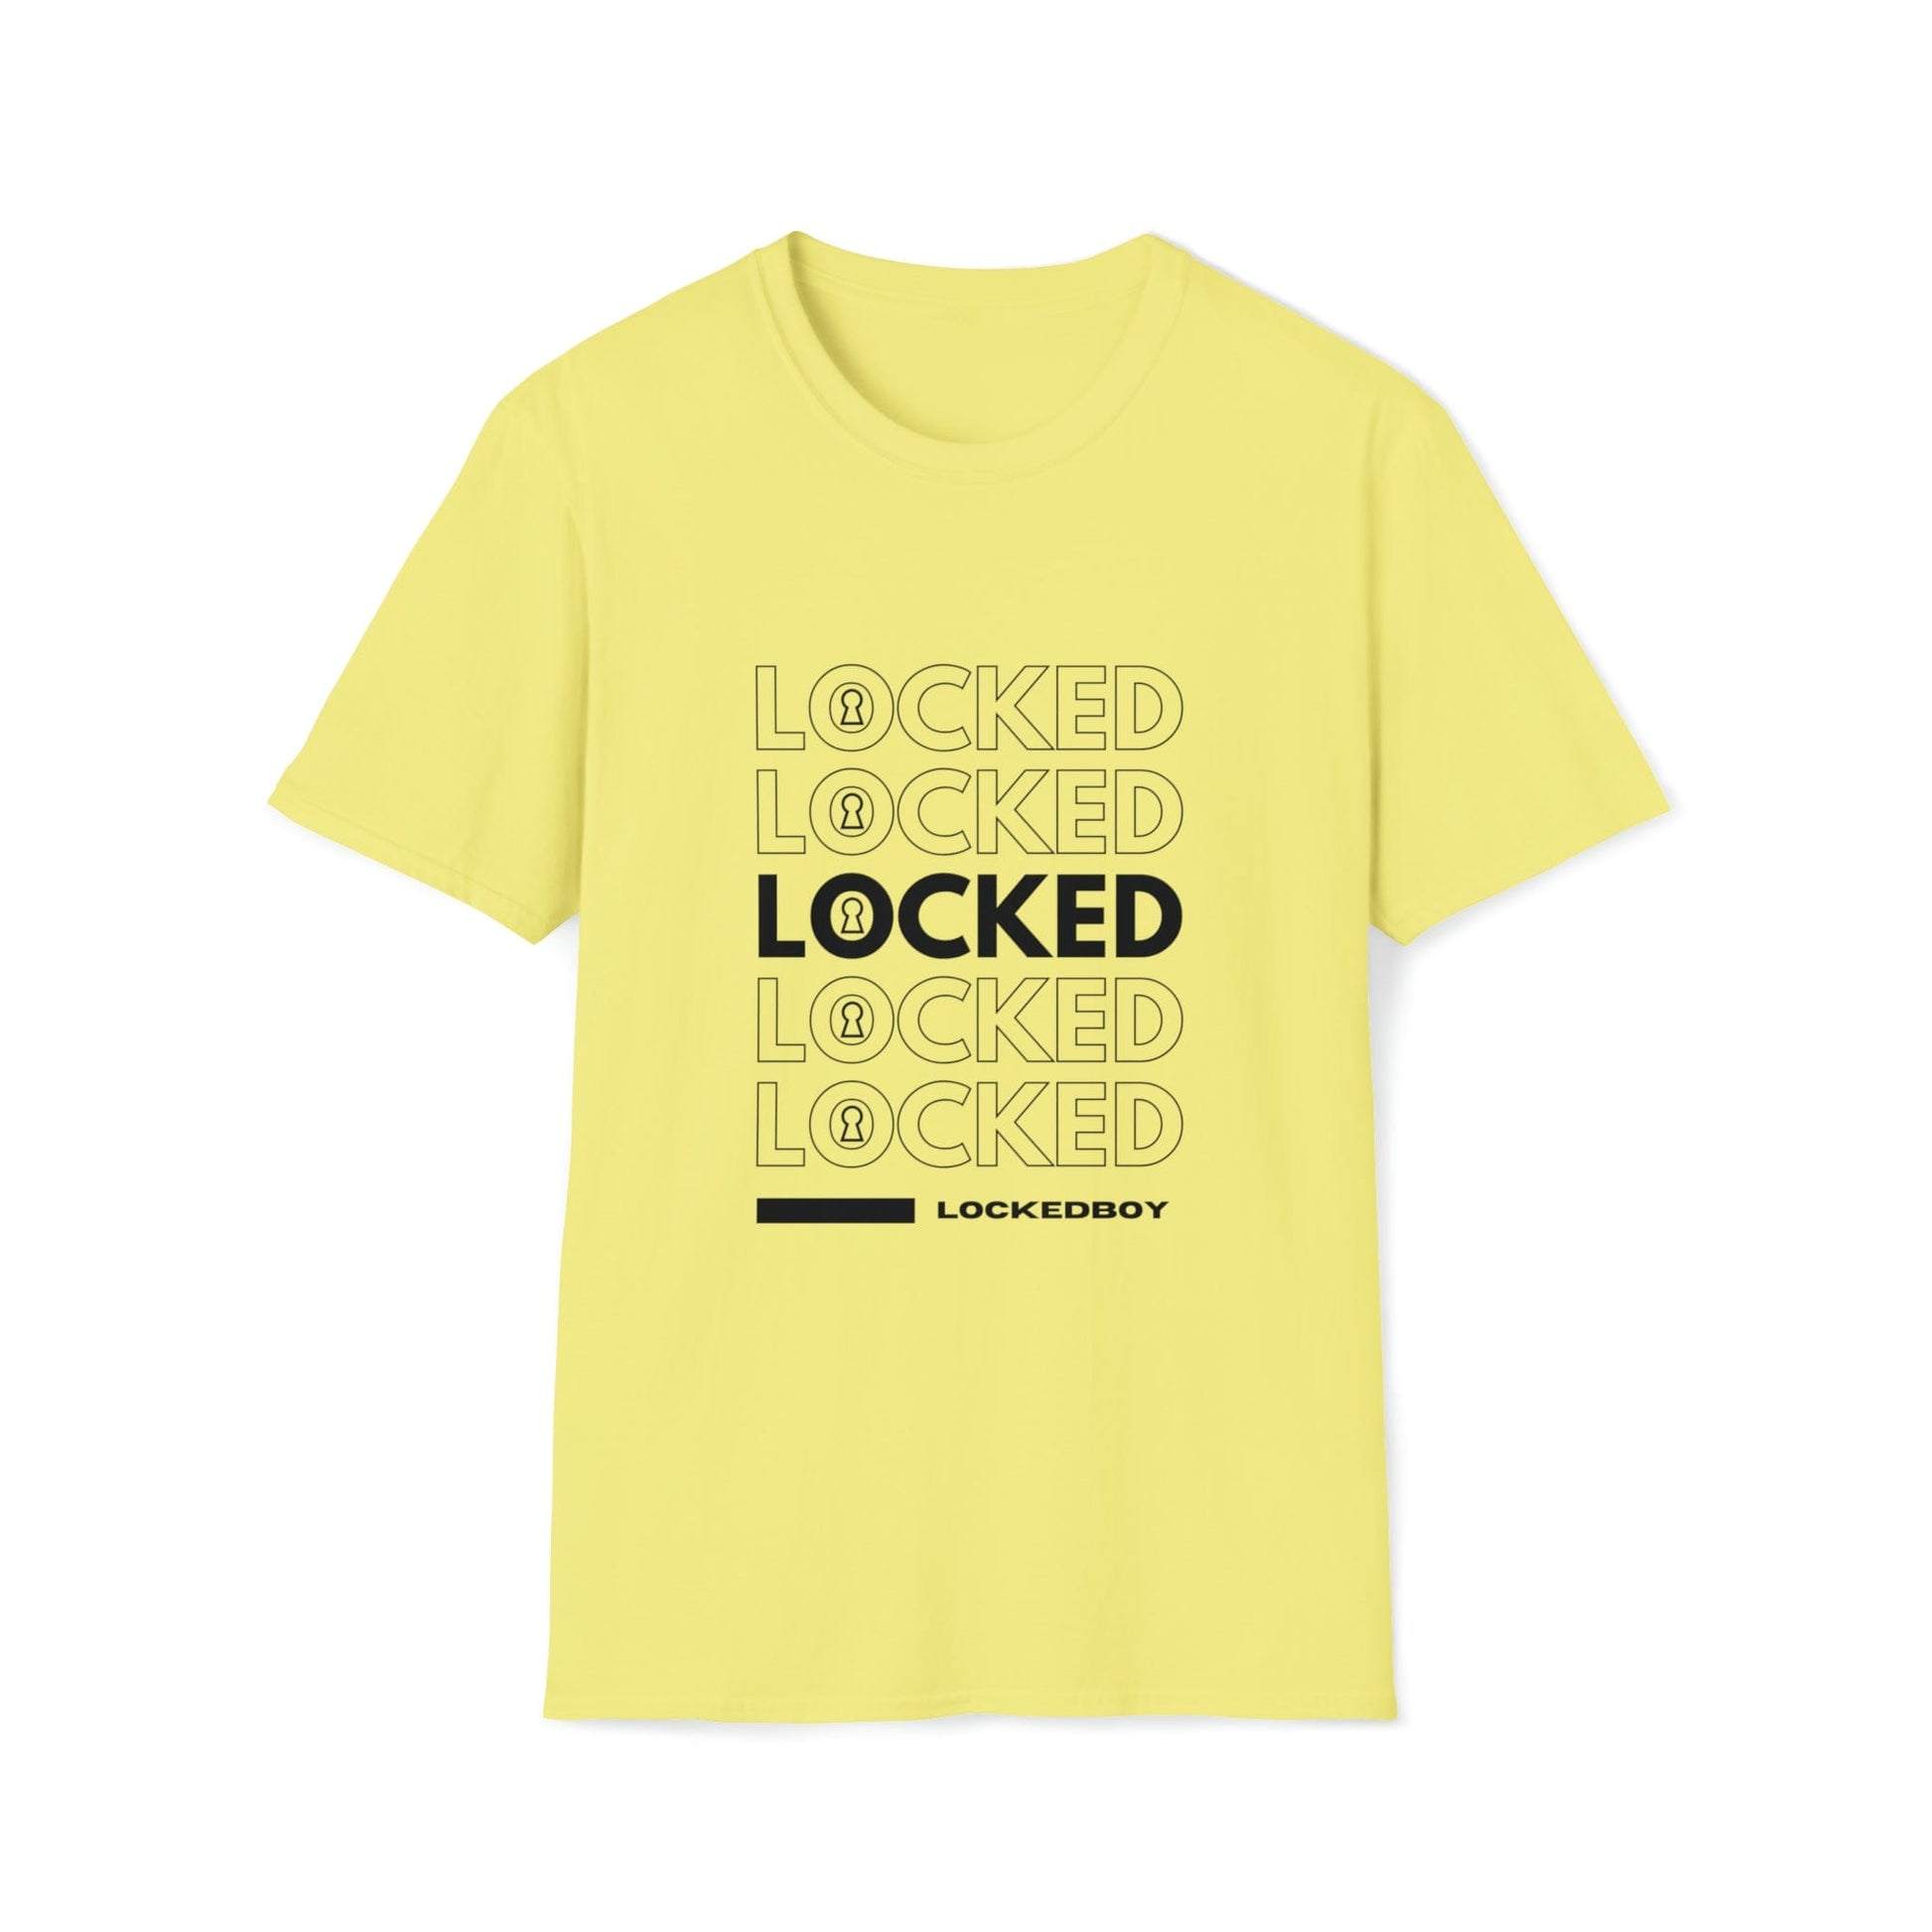 T-Shirt Cornsilk / S LOCKED Inspo (black text) - Chastity Shirts by LockedBoy Athletics LEATHERDADDY BATOR